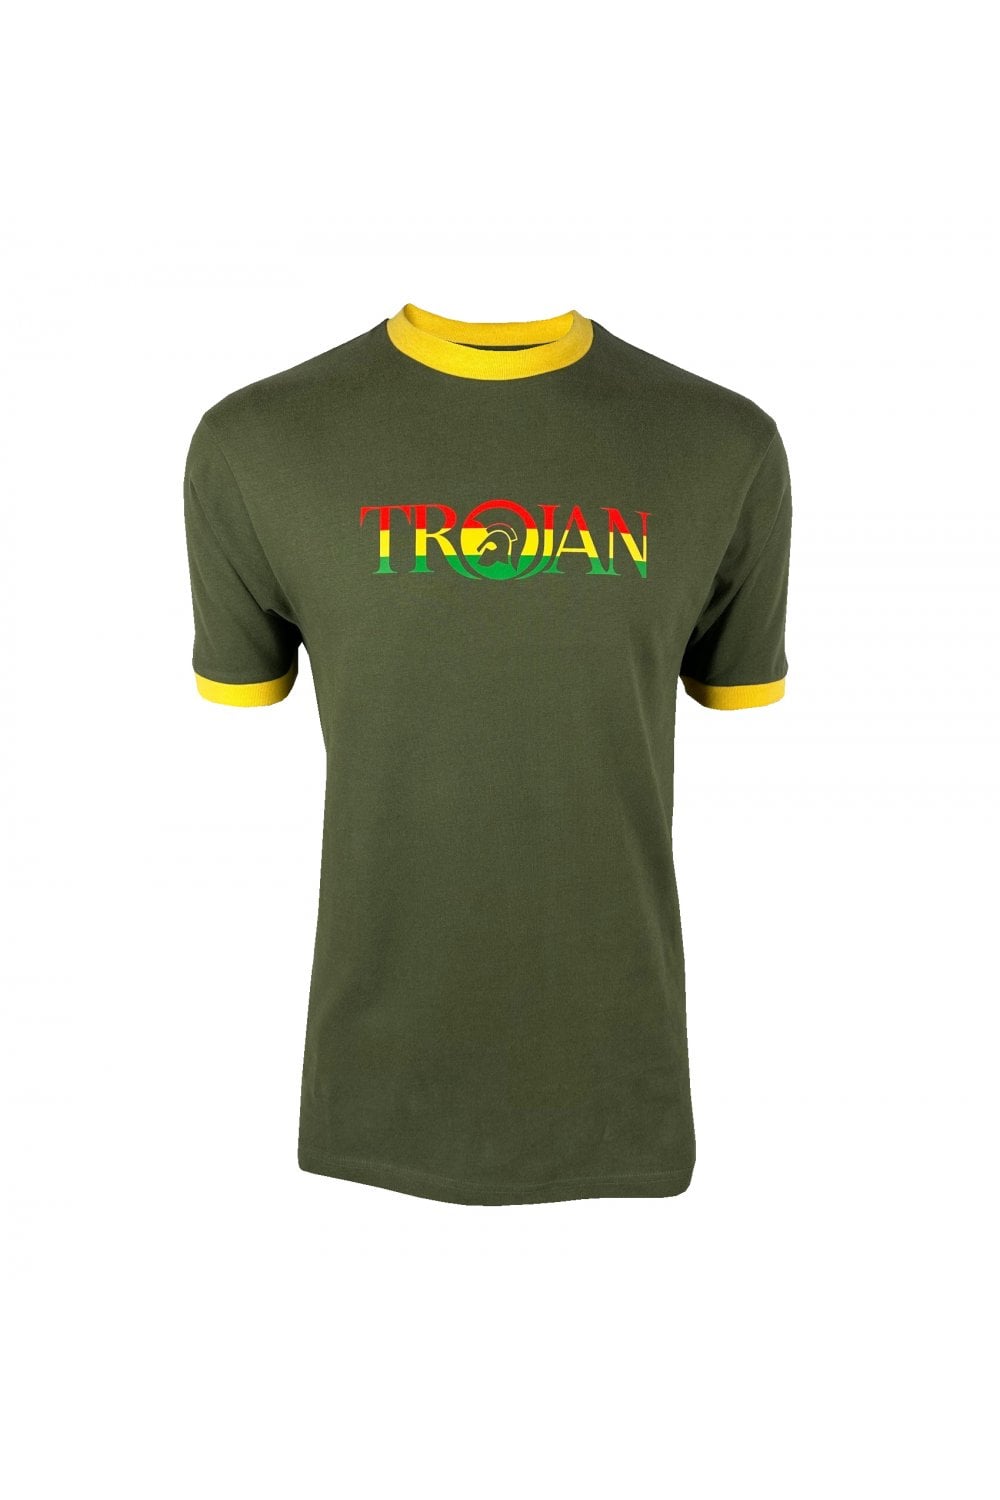 Trojan Logo Ringer T-Shirt TC/1014 in Army